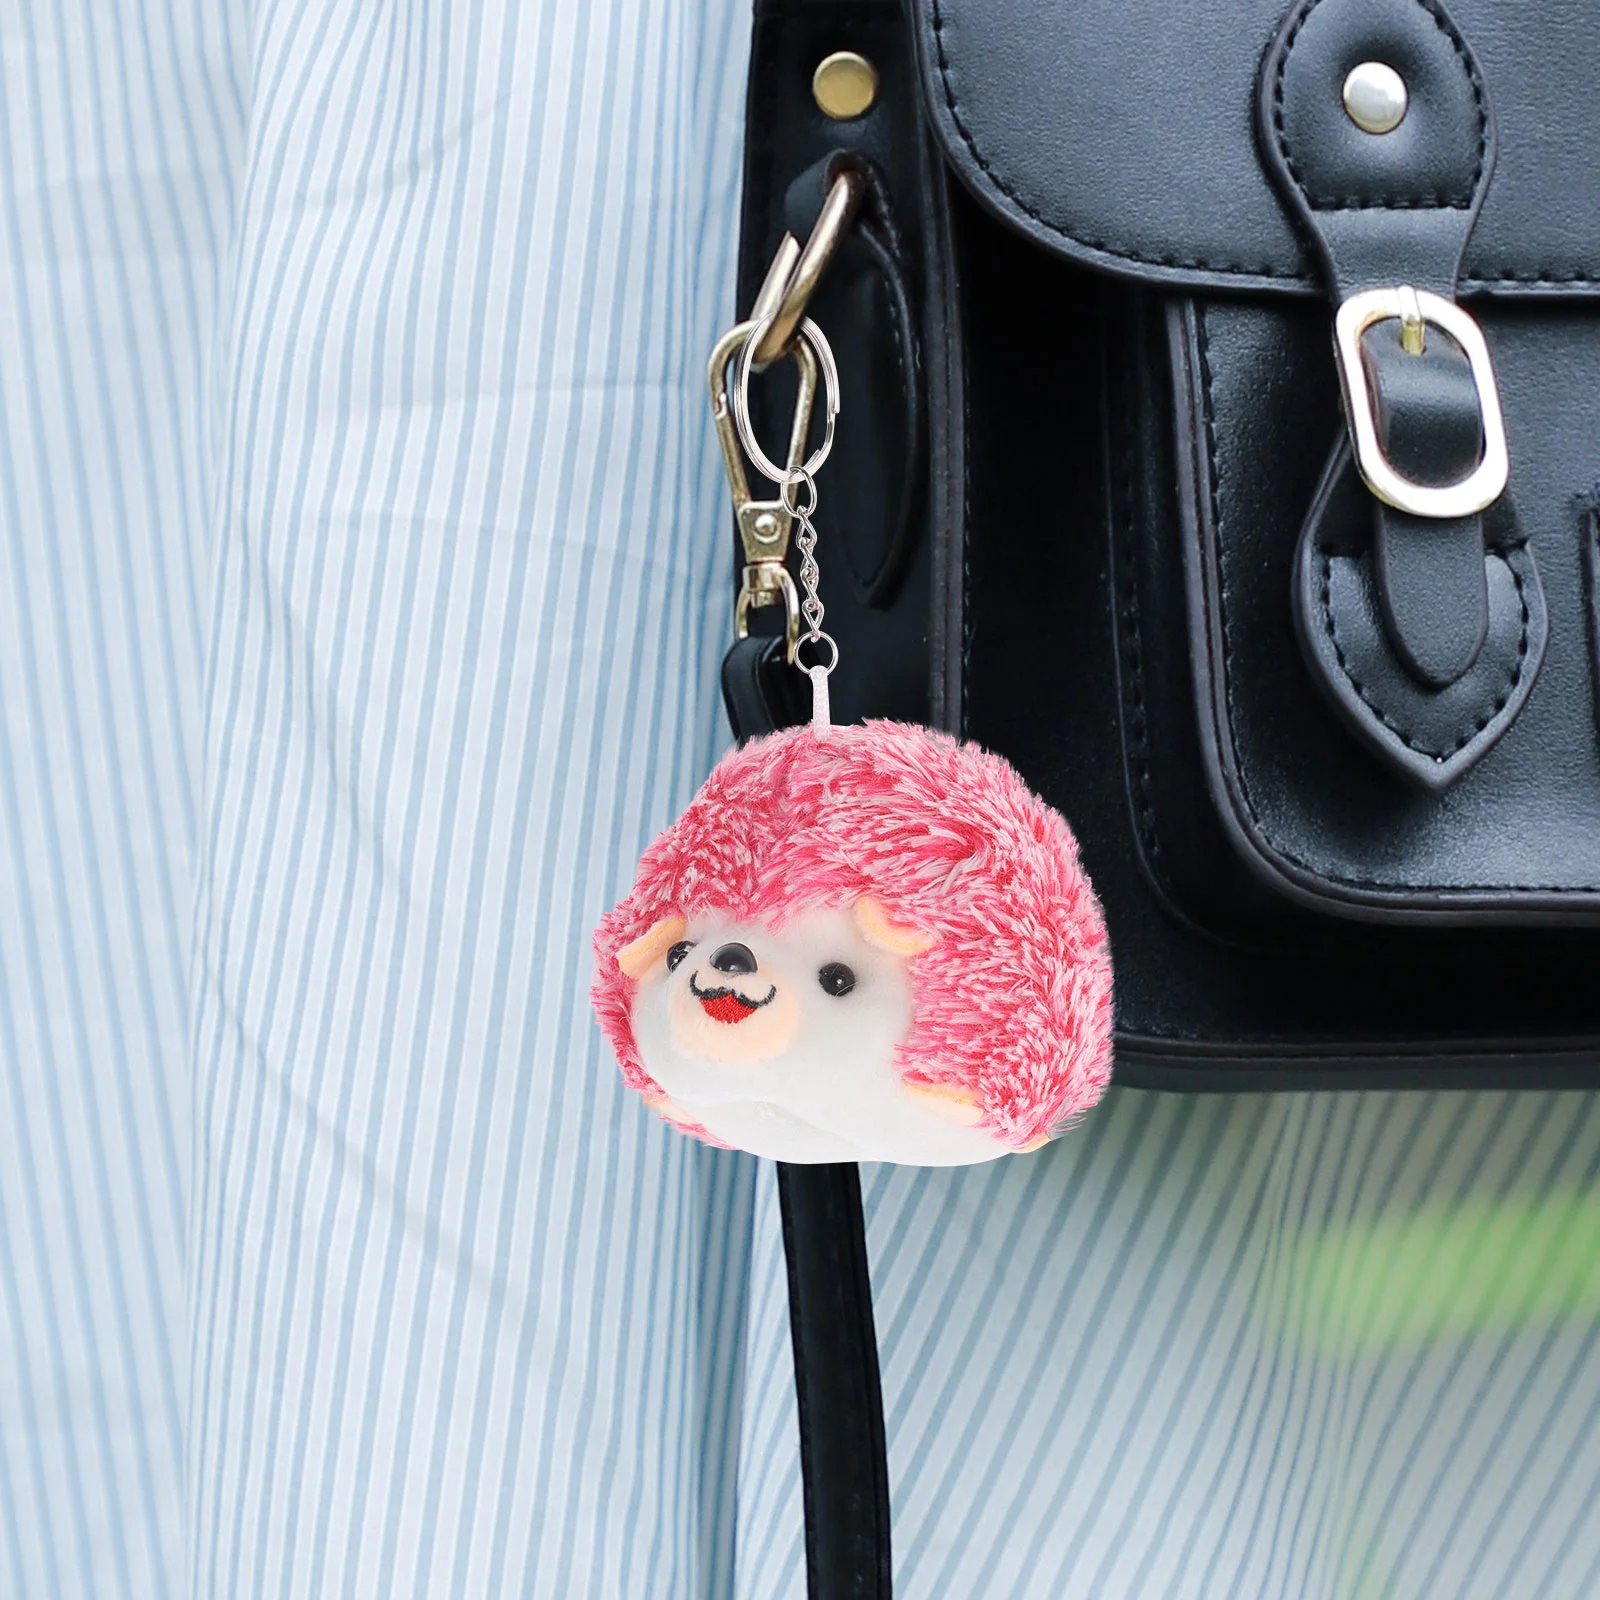 

Key Chain Plush Hanging Decor Chains Car Keys Mini Backpack Keychain Handbag Stuffed Hedgehog Adorable Kawaii